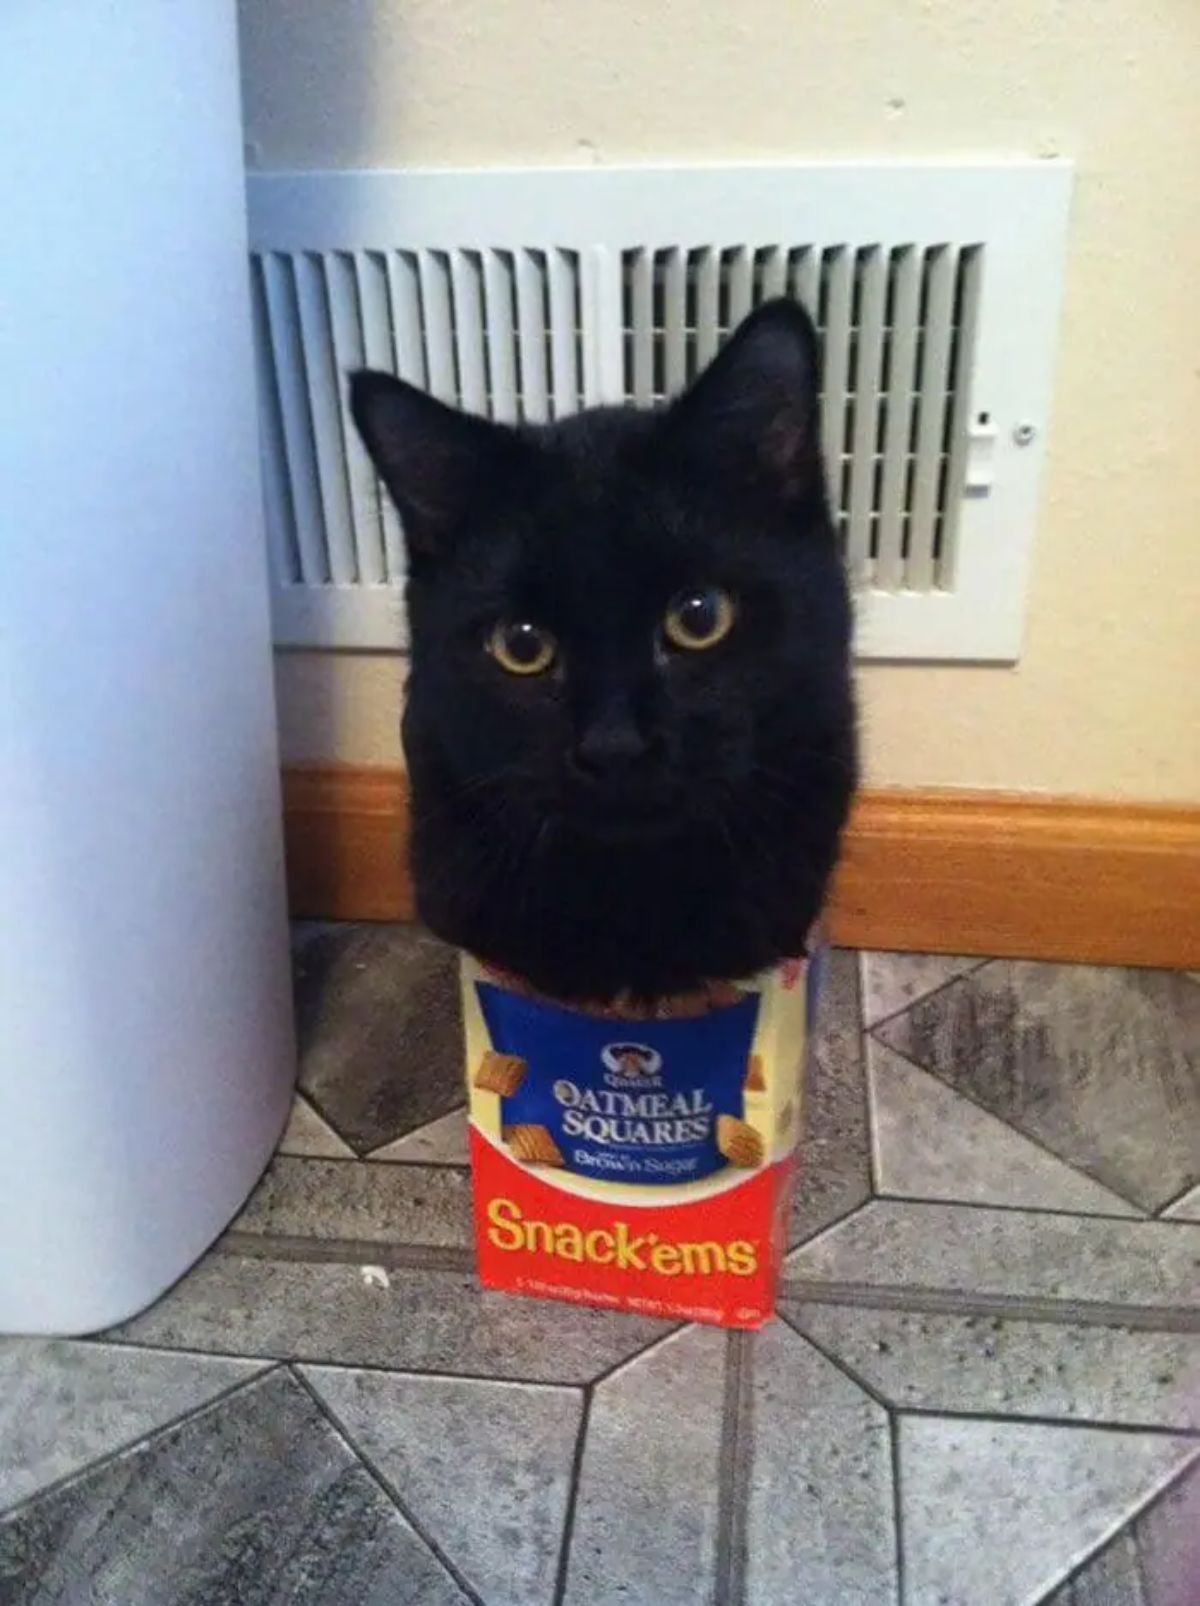 black cat sitting inside a cardboard box of oatmeal squares